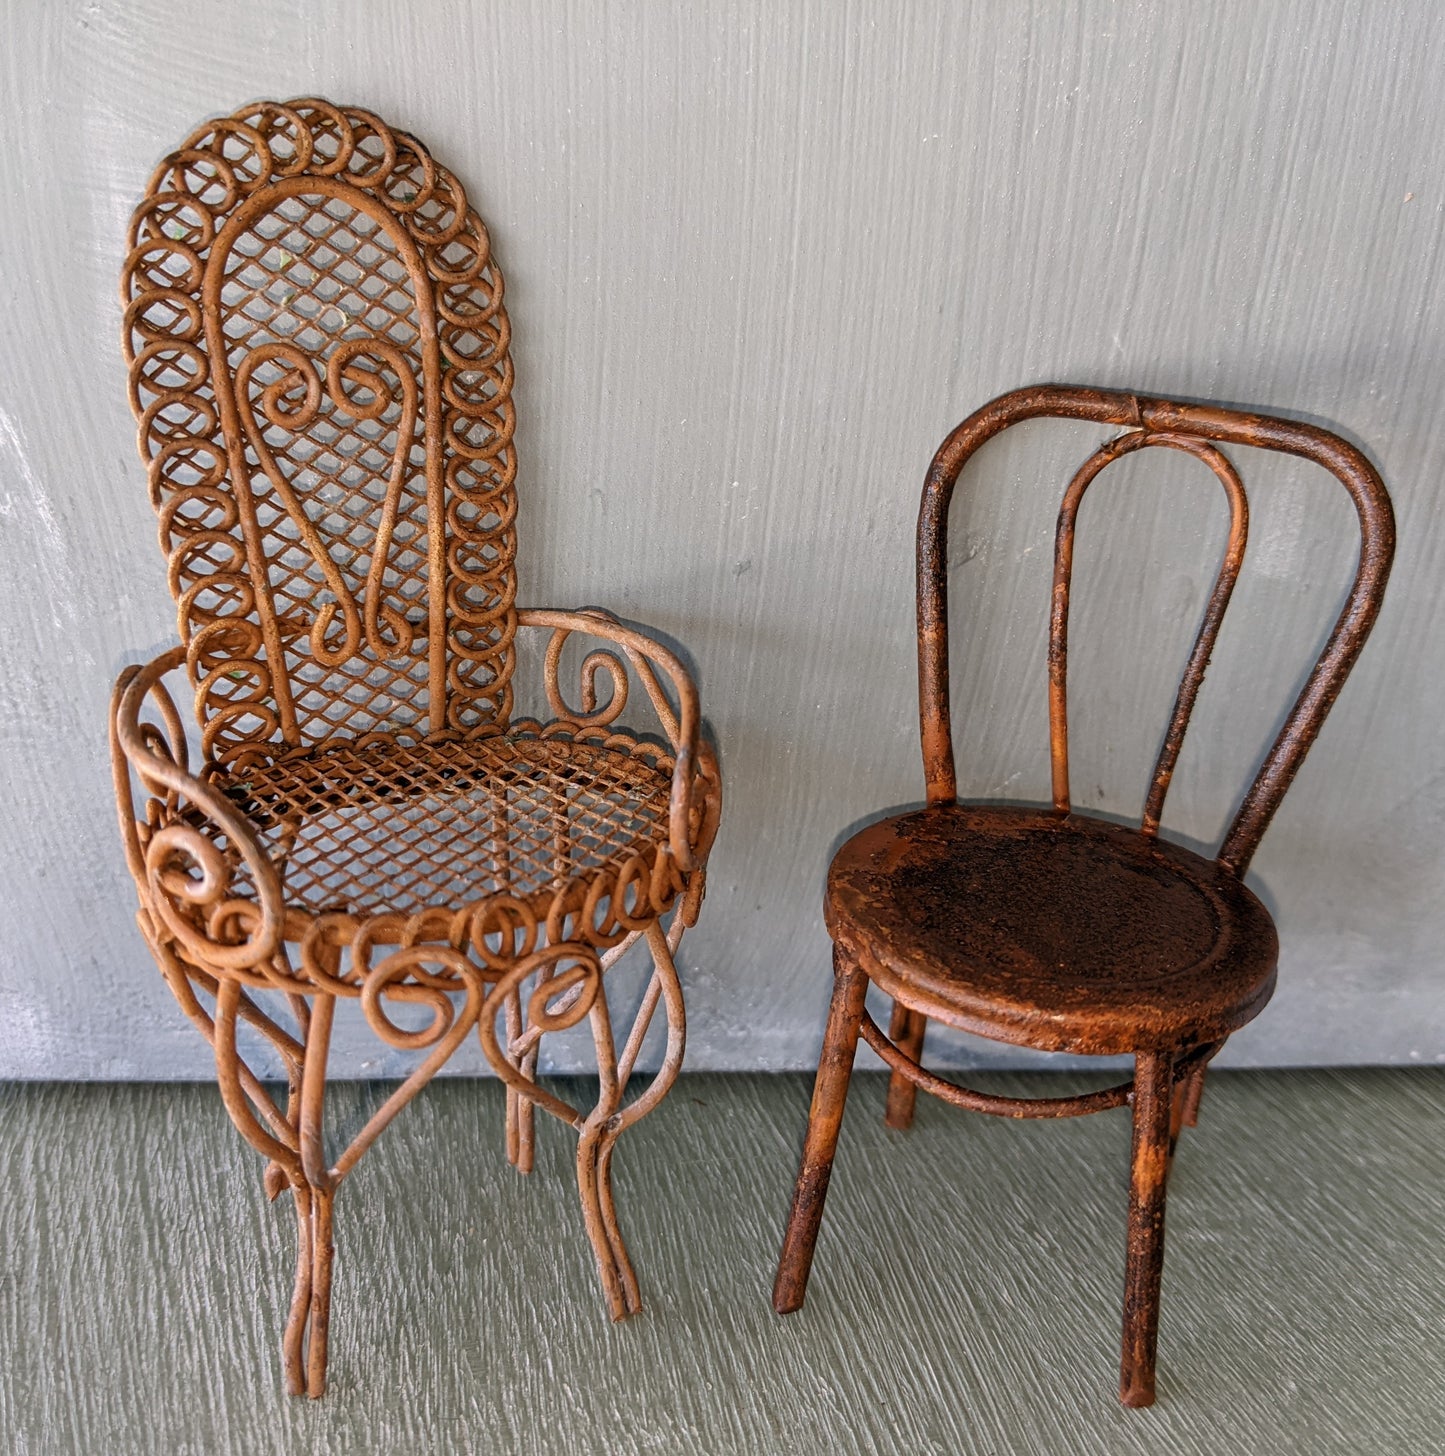 Rusted Mini Chair